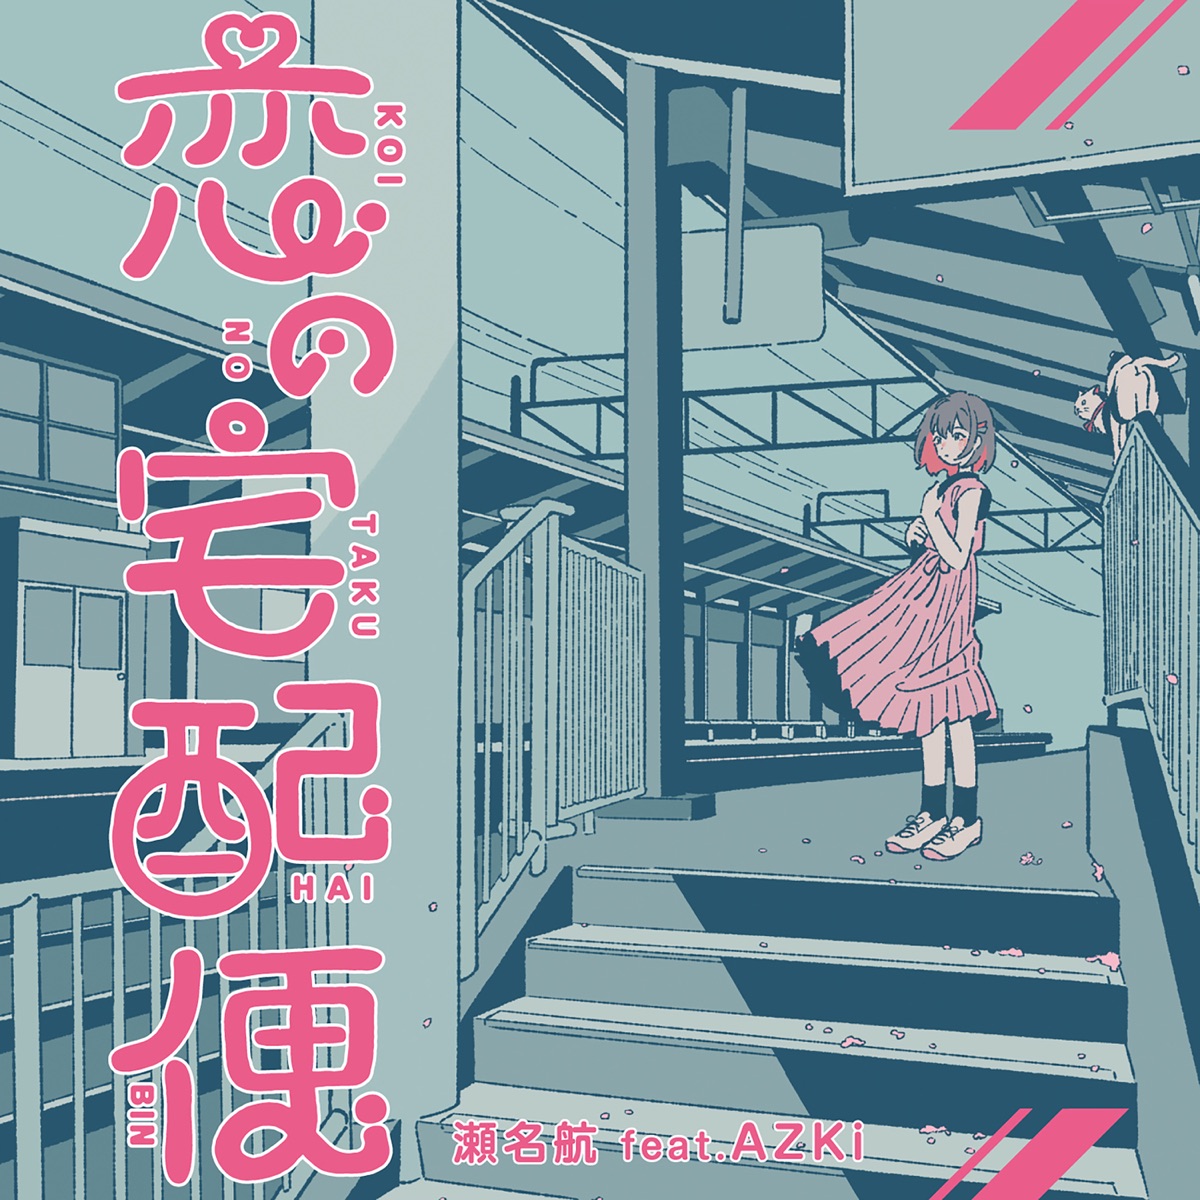 Cover art for『Wataru Sena feat. AZKi - 大切なお知らせ』from the release『Koi no Takuhaibin